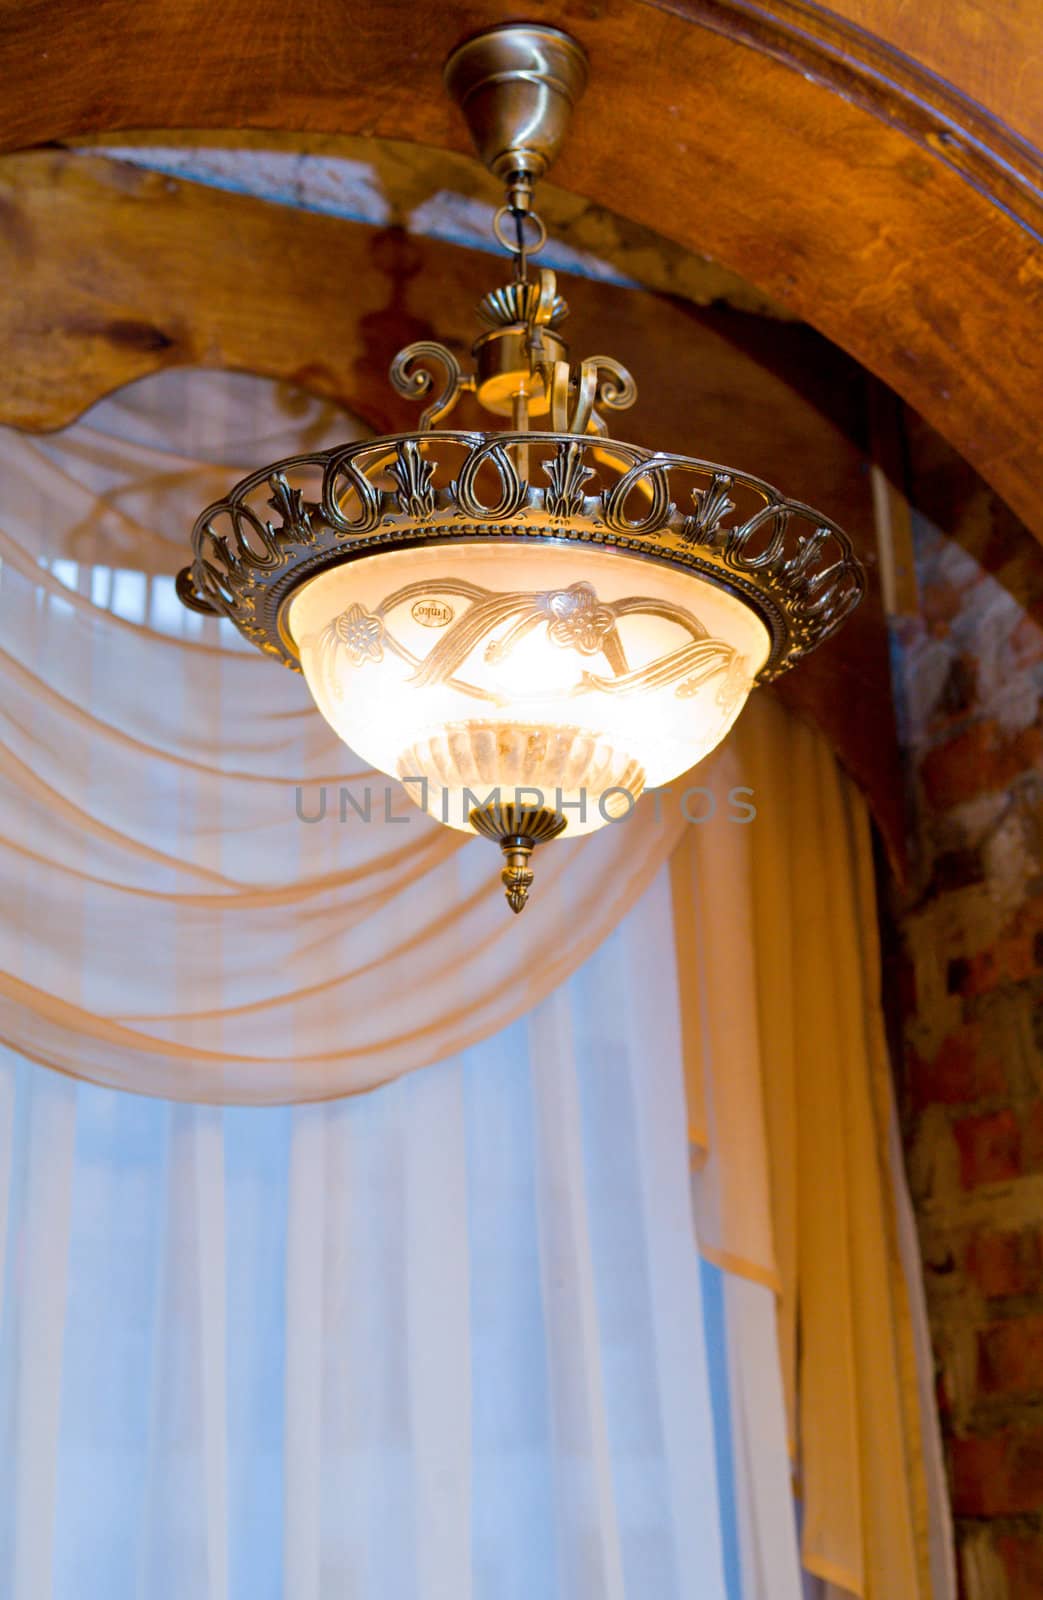 Old copper lamp under ceiling near window